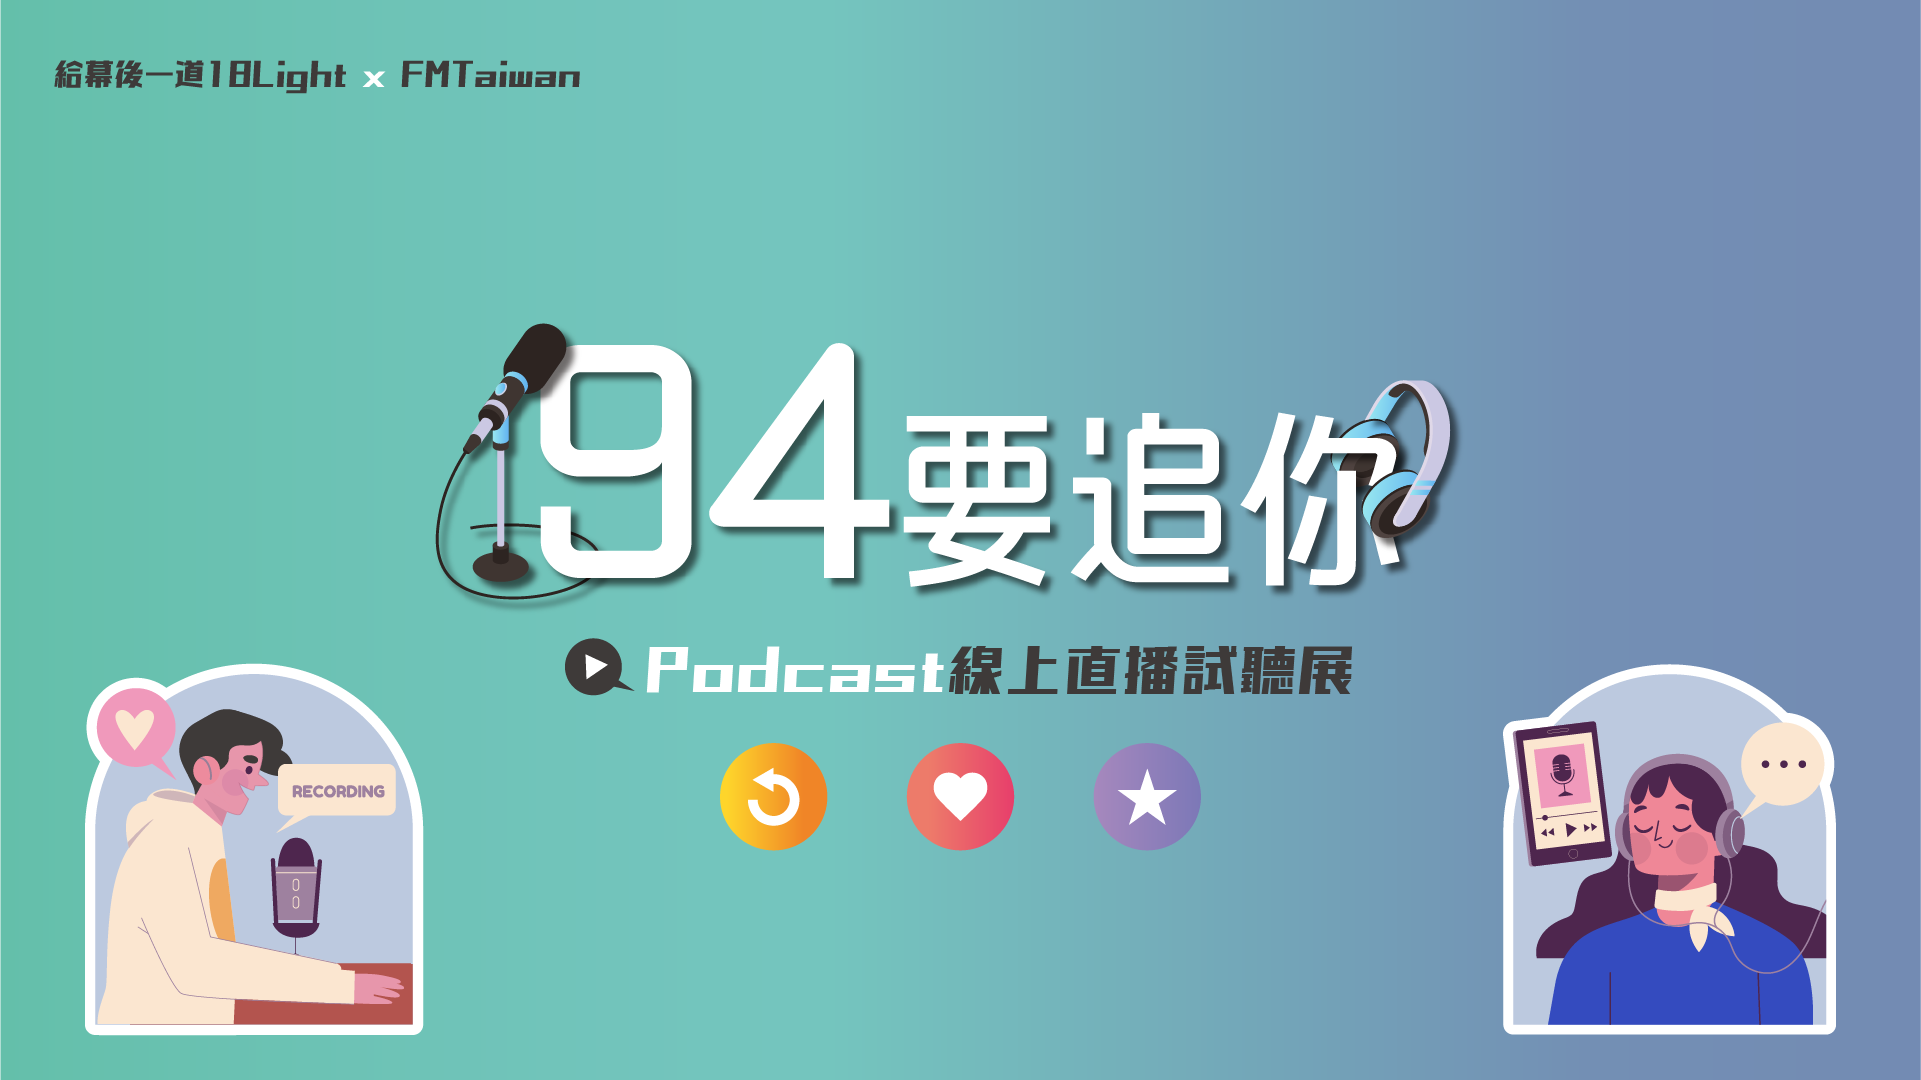 FMTaiwan 94要追你 Podcast串聯